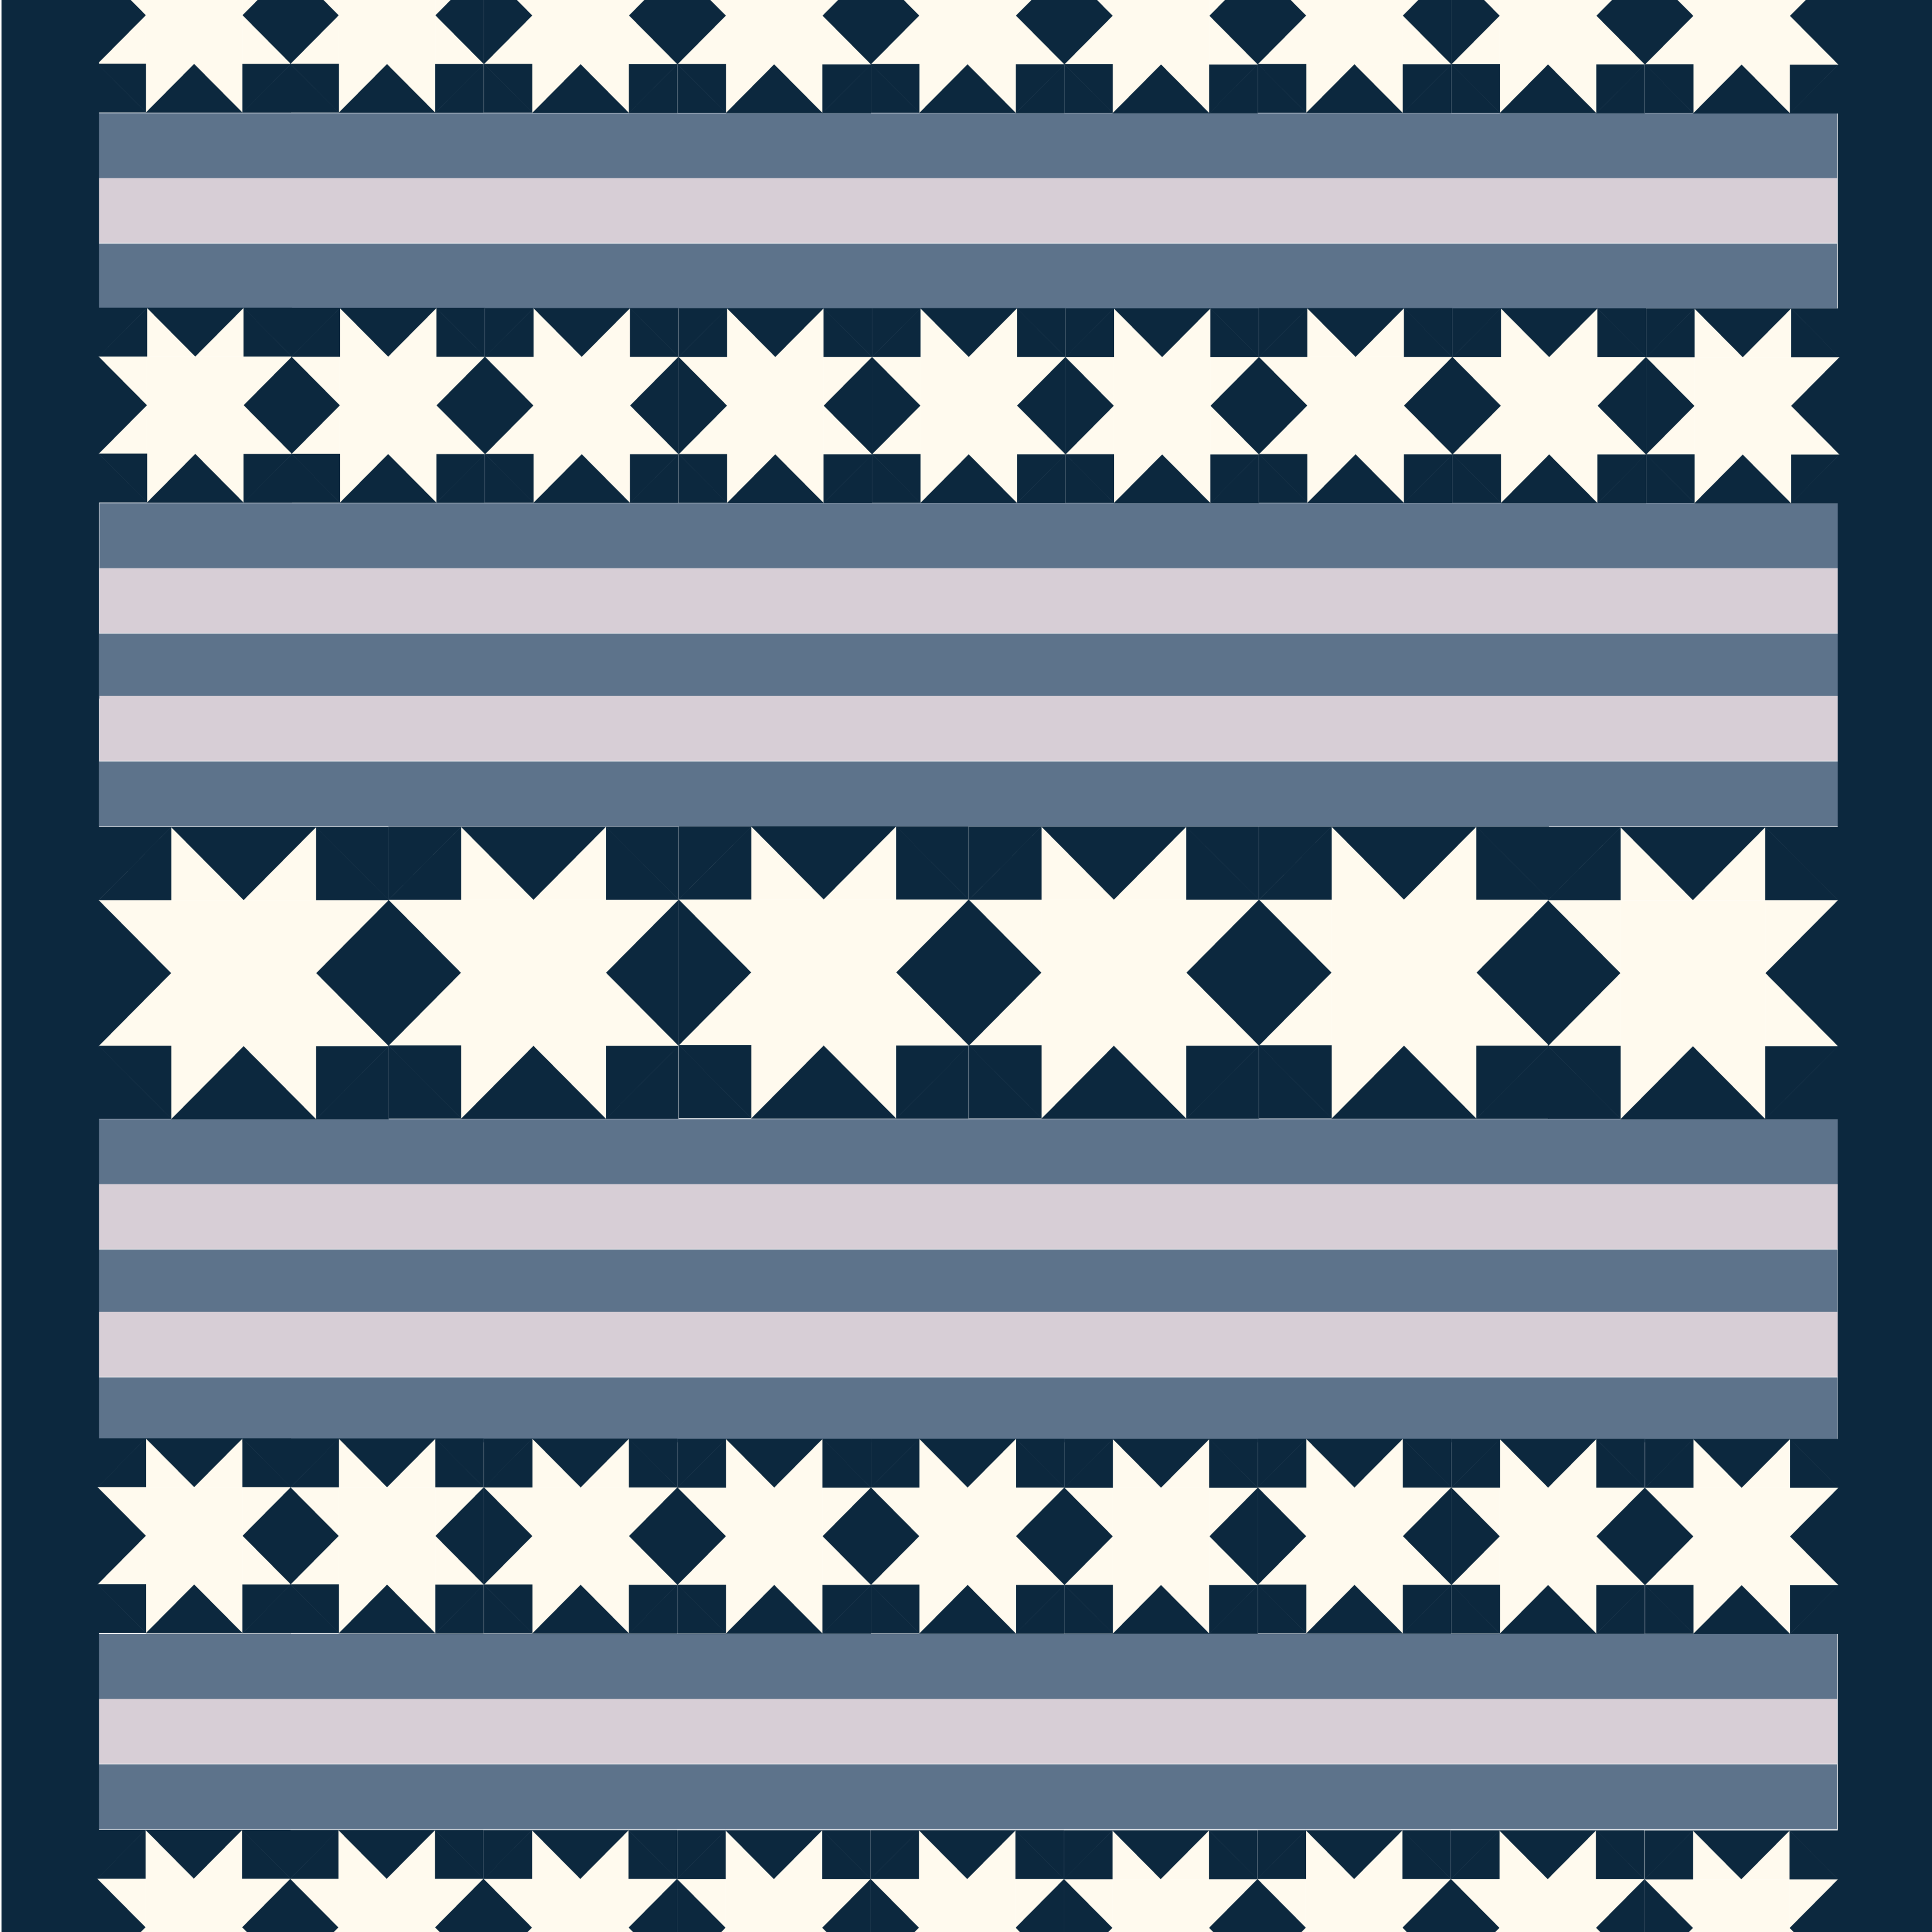 simple aztec pattern teal